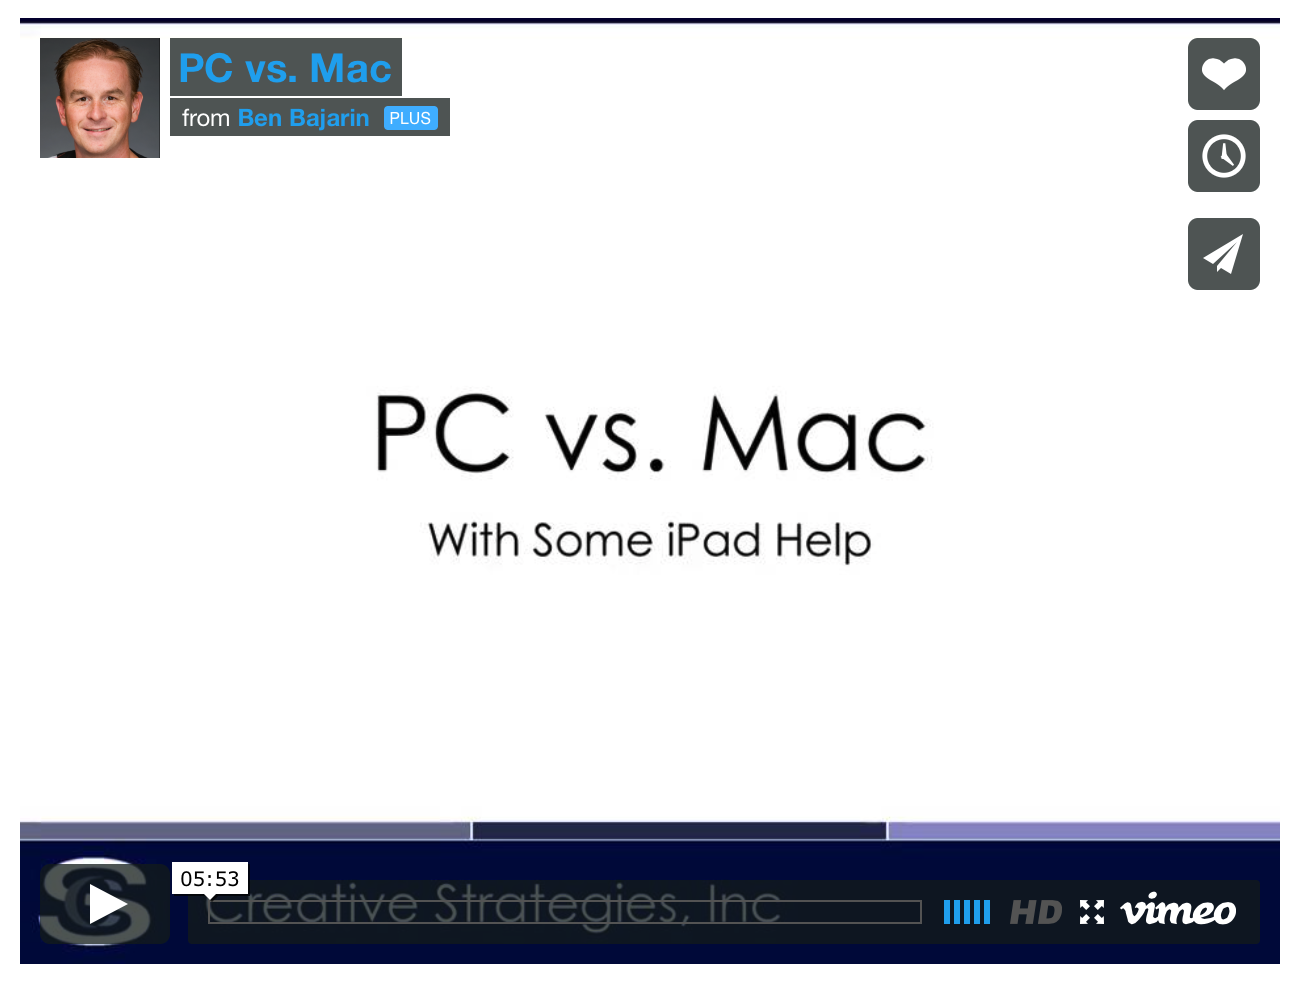 Video Analysis: Mac vs. PC With Some iPad Help